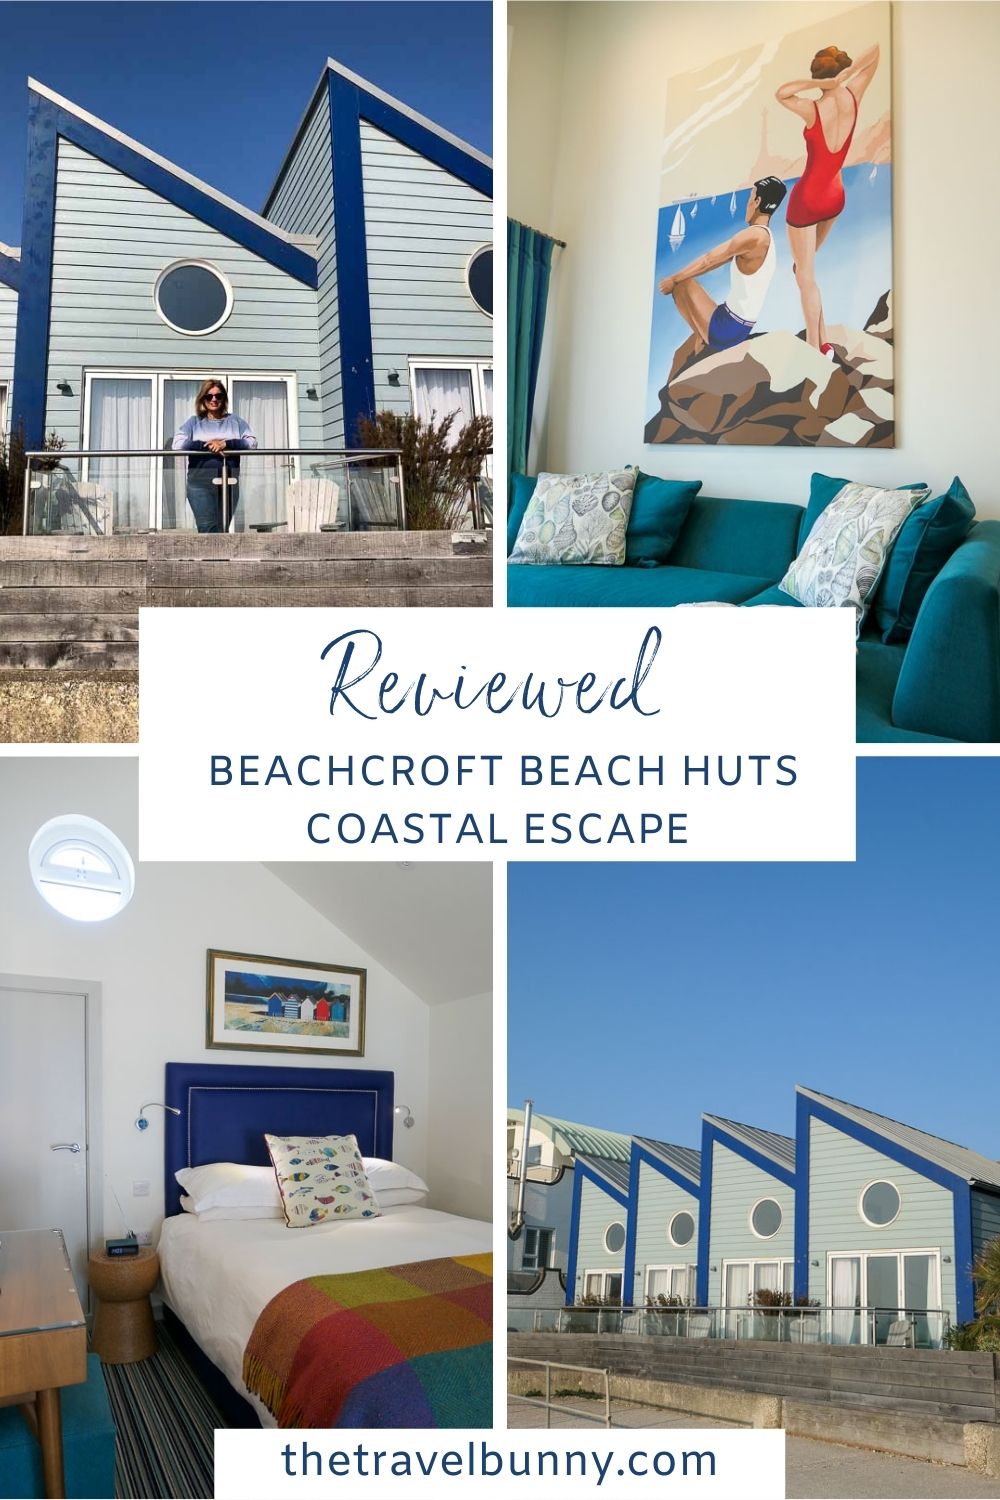 Beachcroft Beach Huts Reviewed